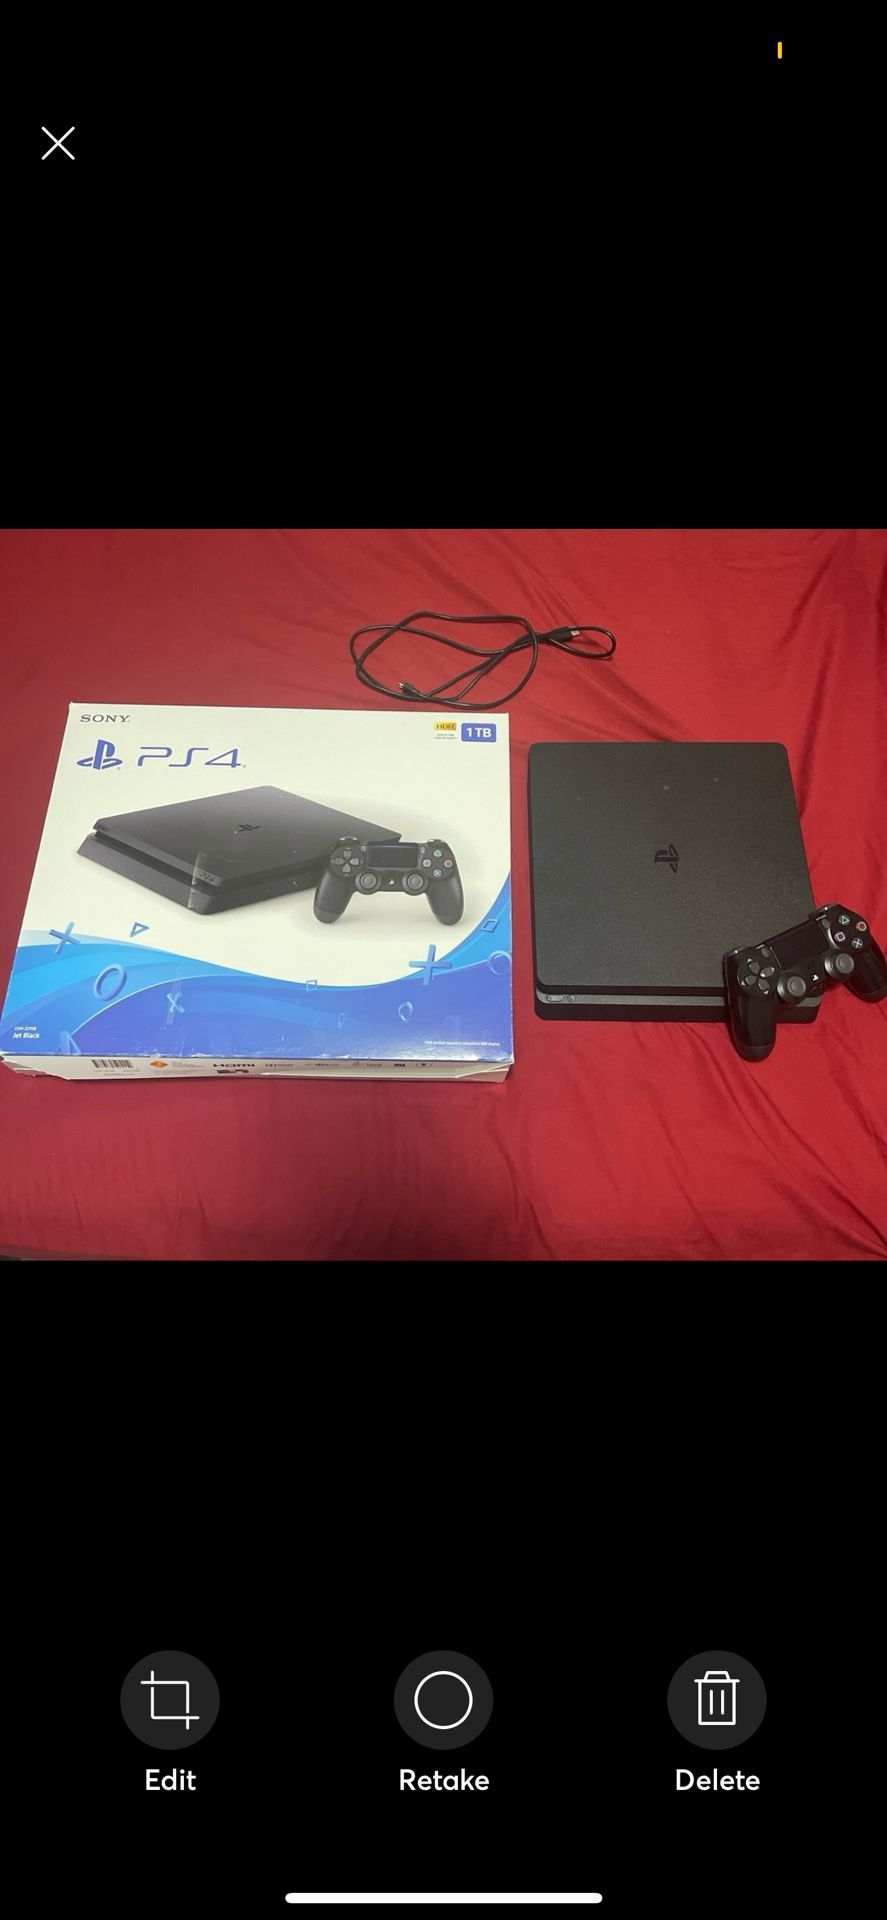 PlayStation 4 Slim 1 TB in Jet Black